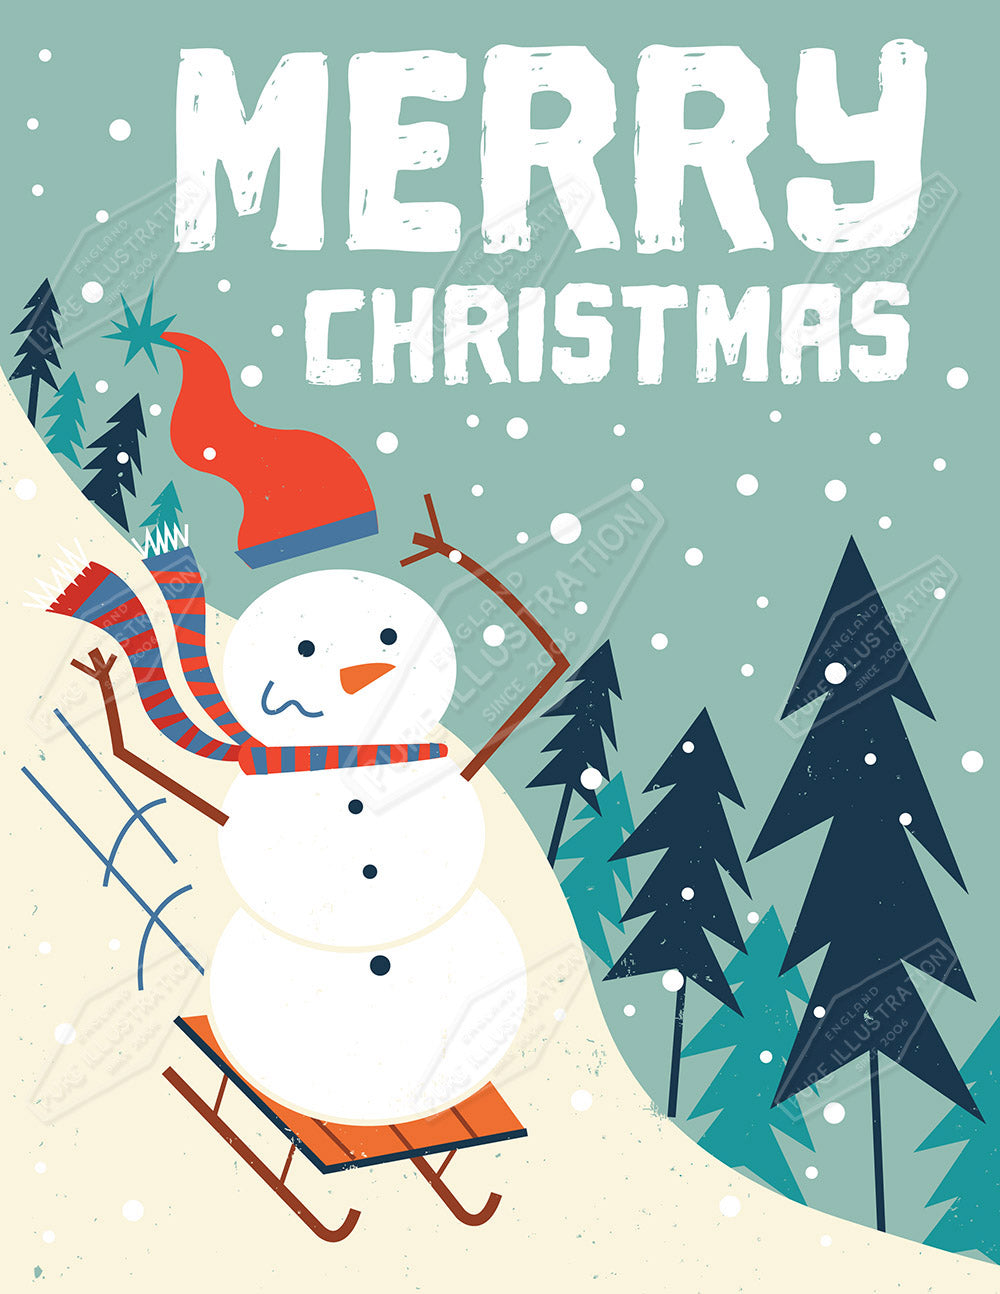 00033429RSW - Luke Swinney is represented by Pure Art Licensing Agency - Christmas Greeting Card Design